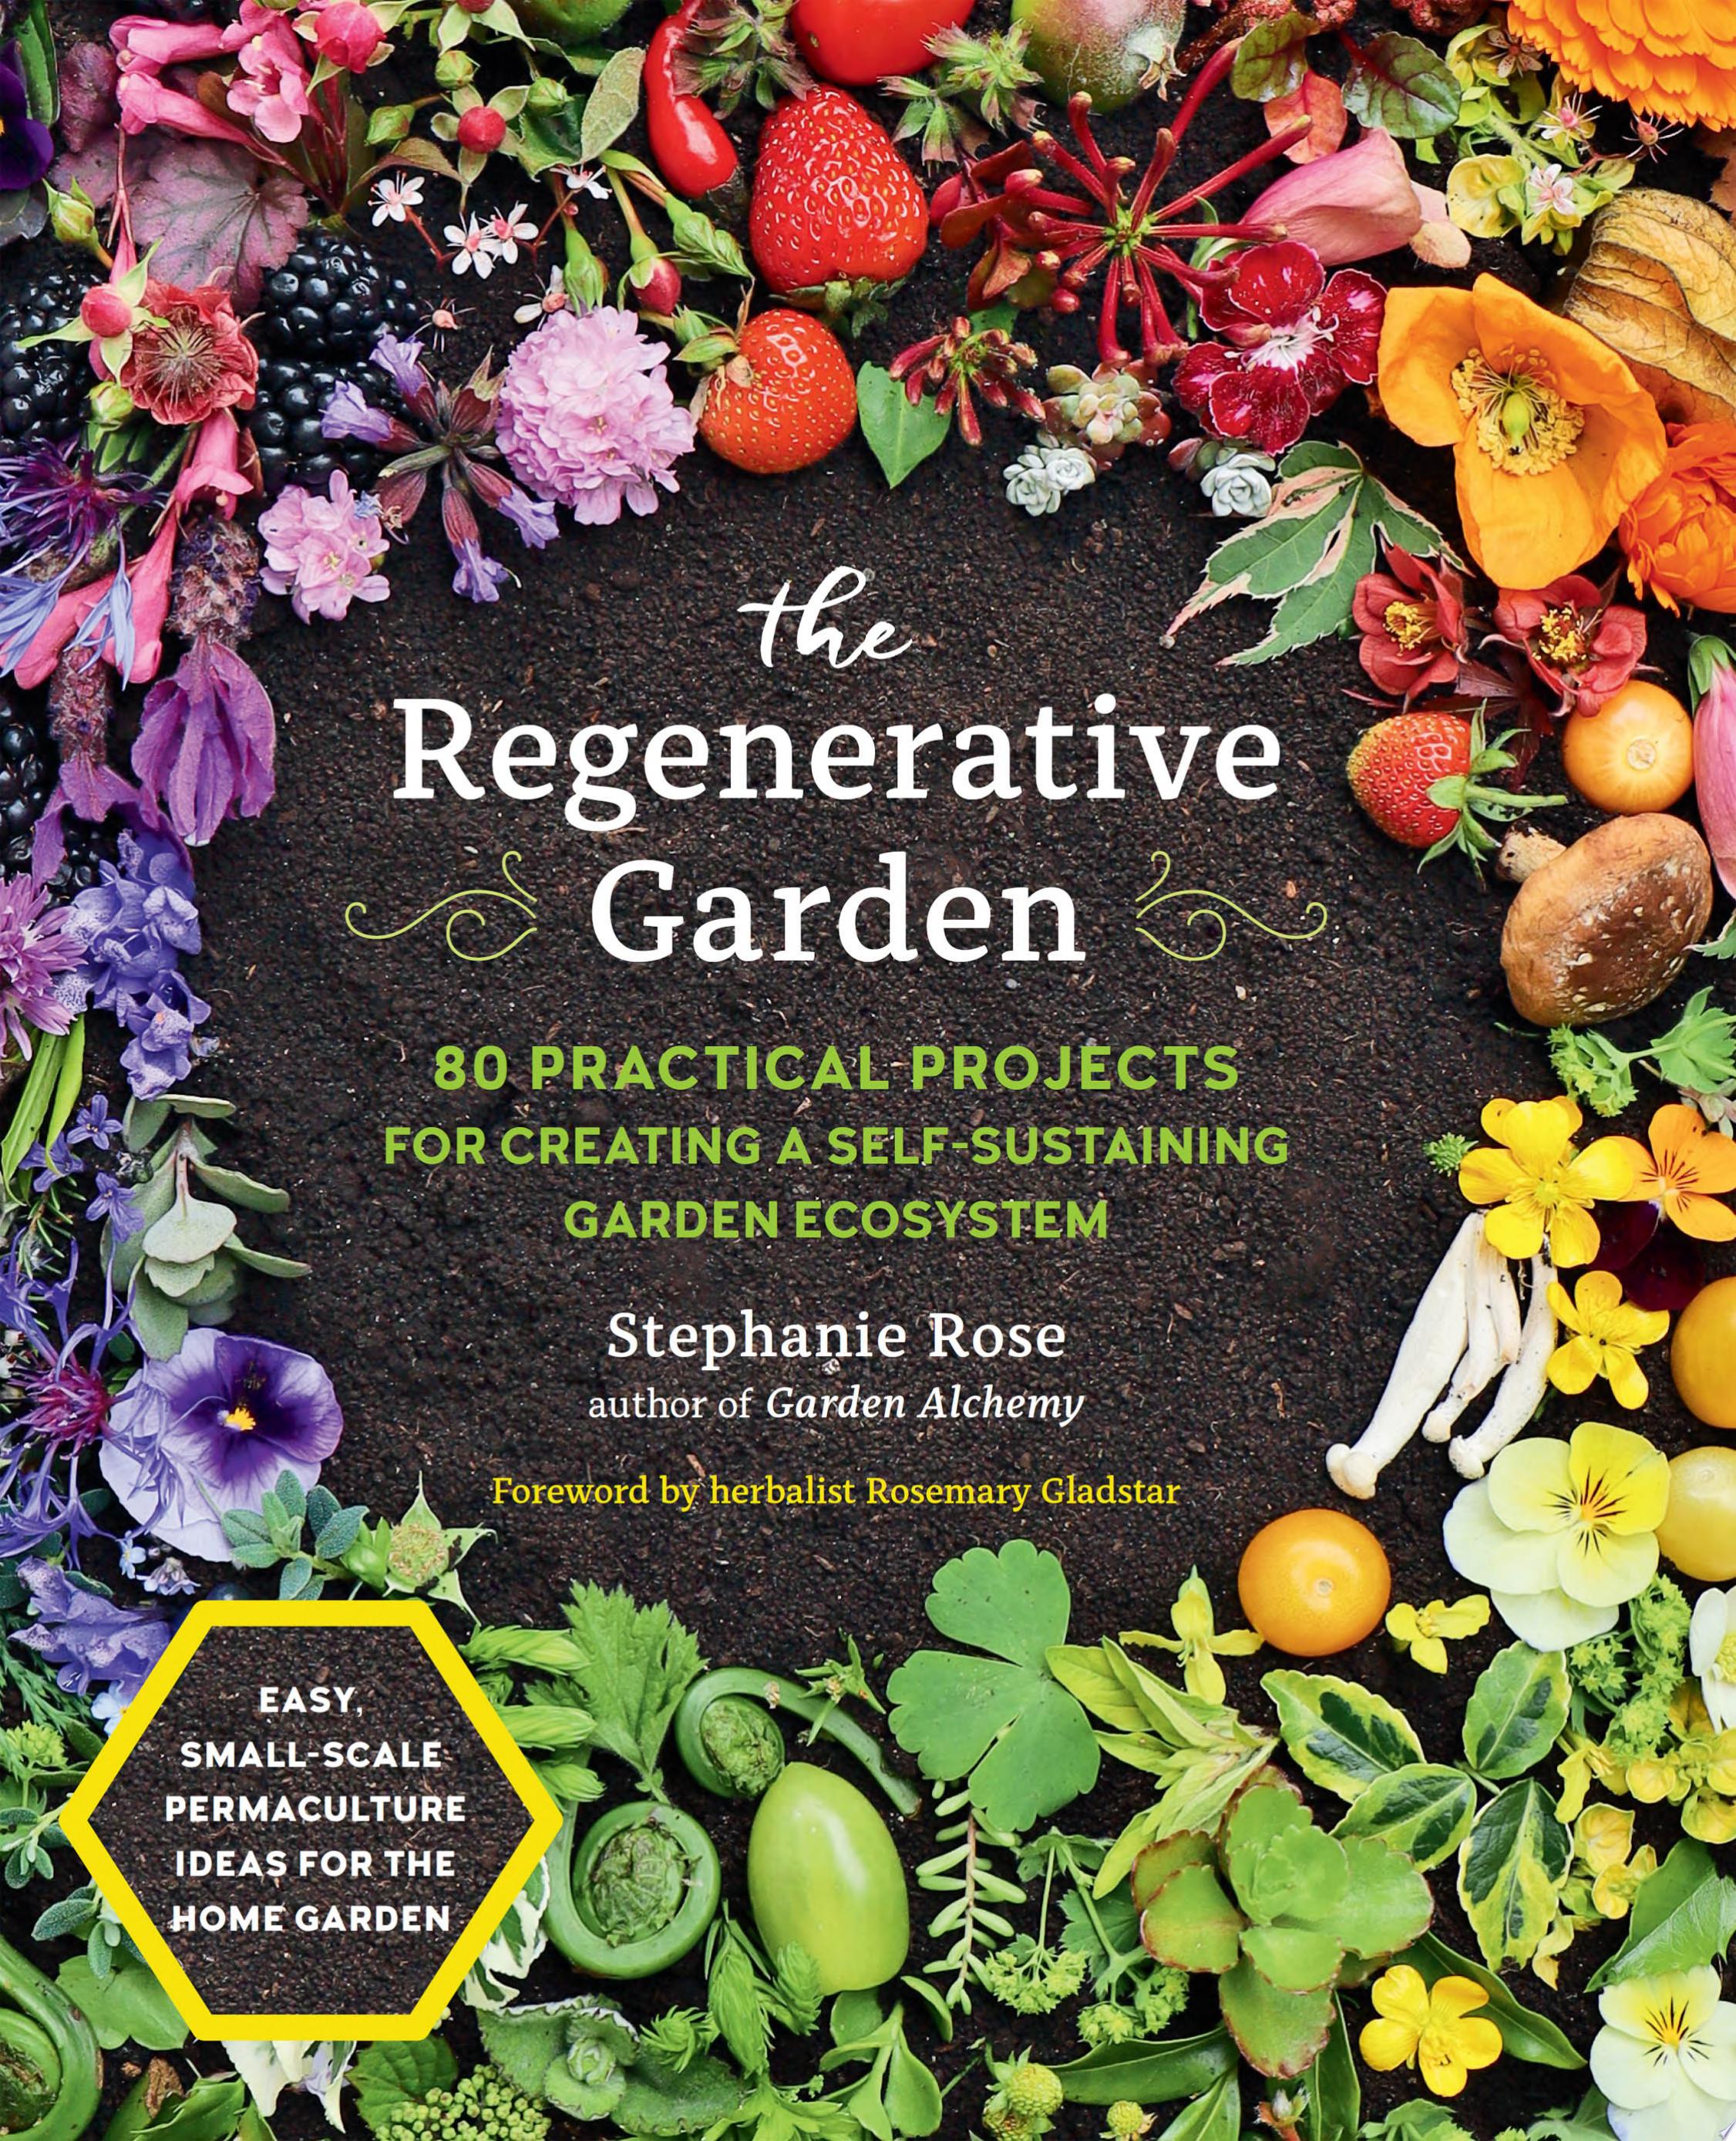 Image for "The Regenerative Garden"